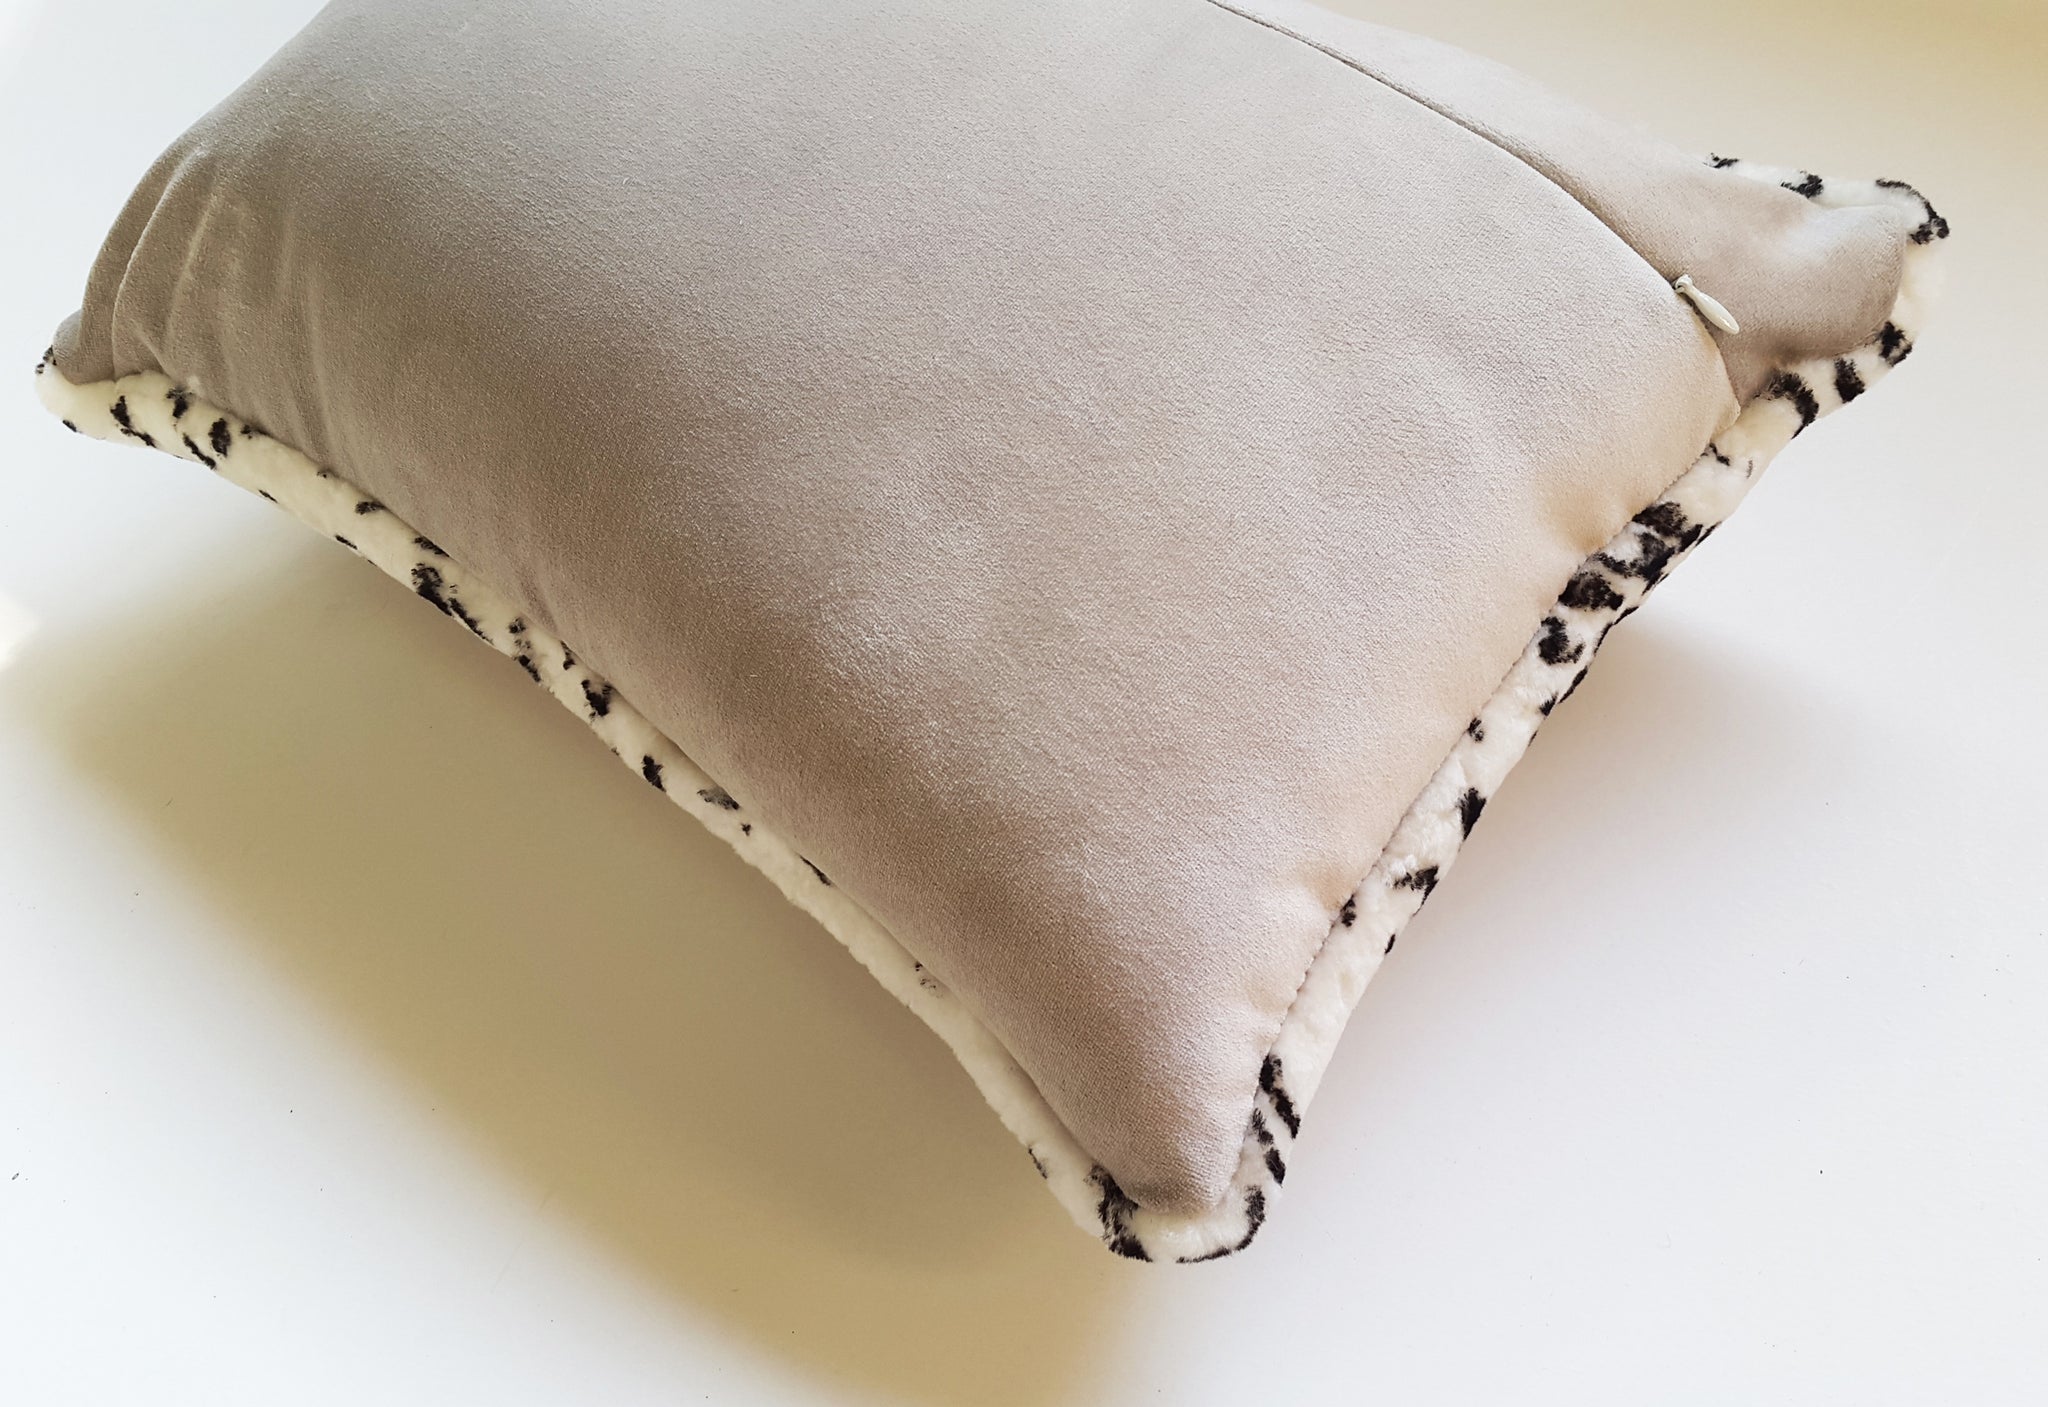 Shearling Leopard Lumbar Pillow